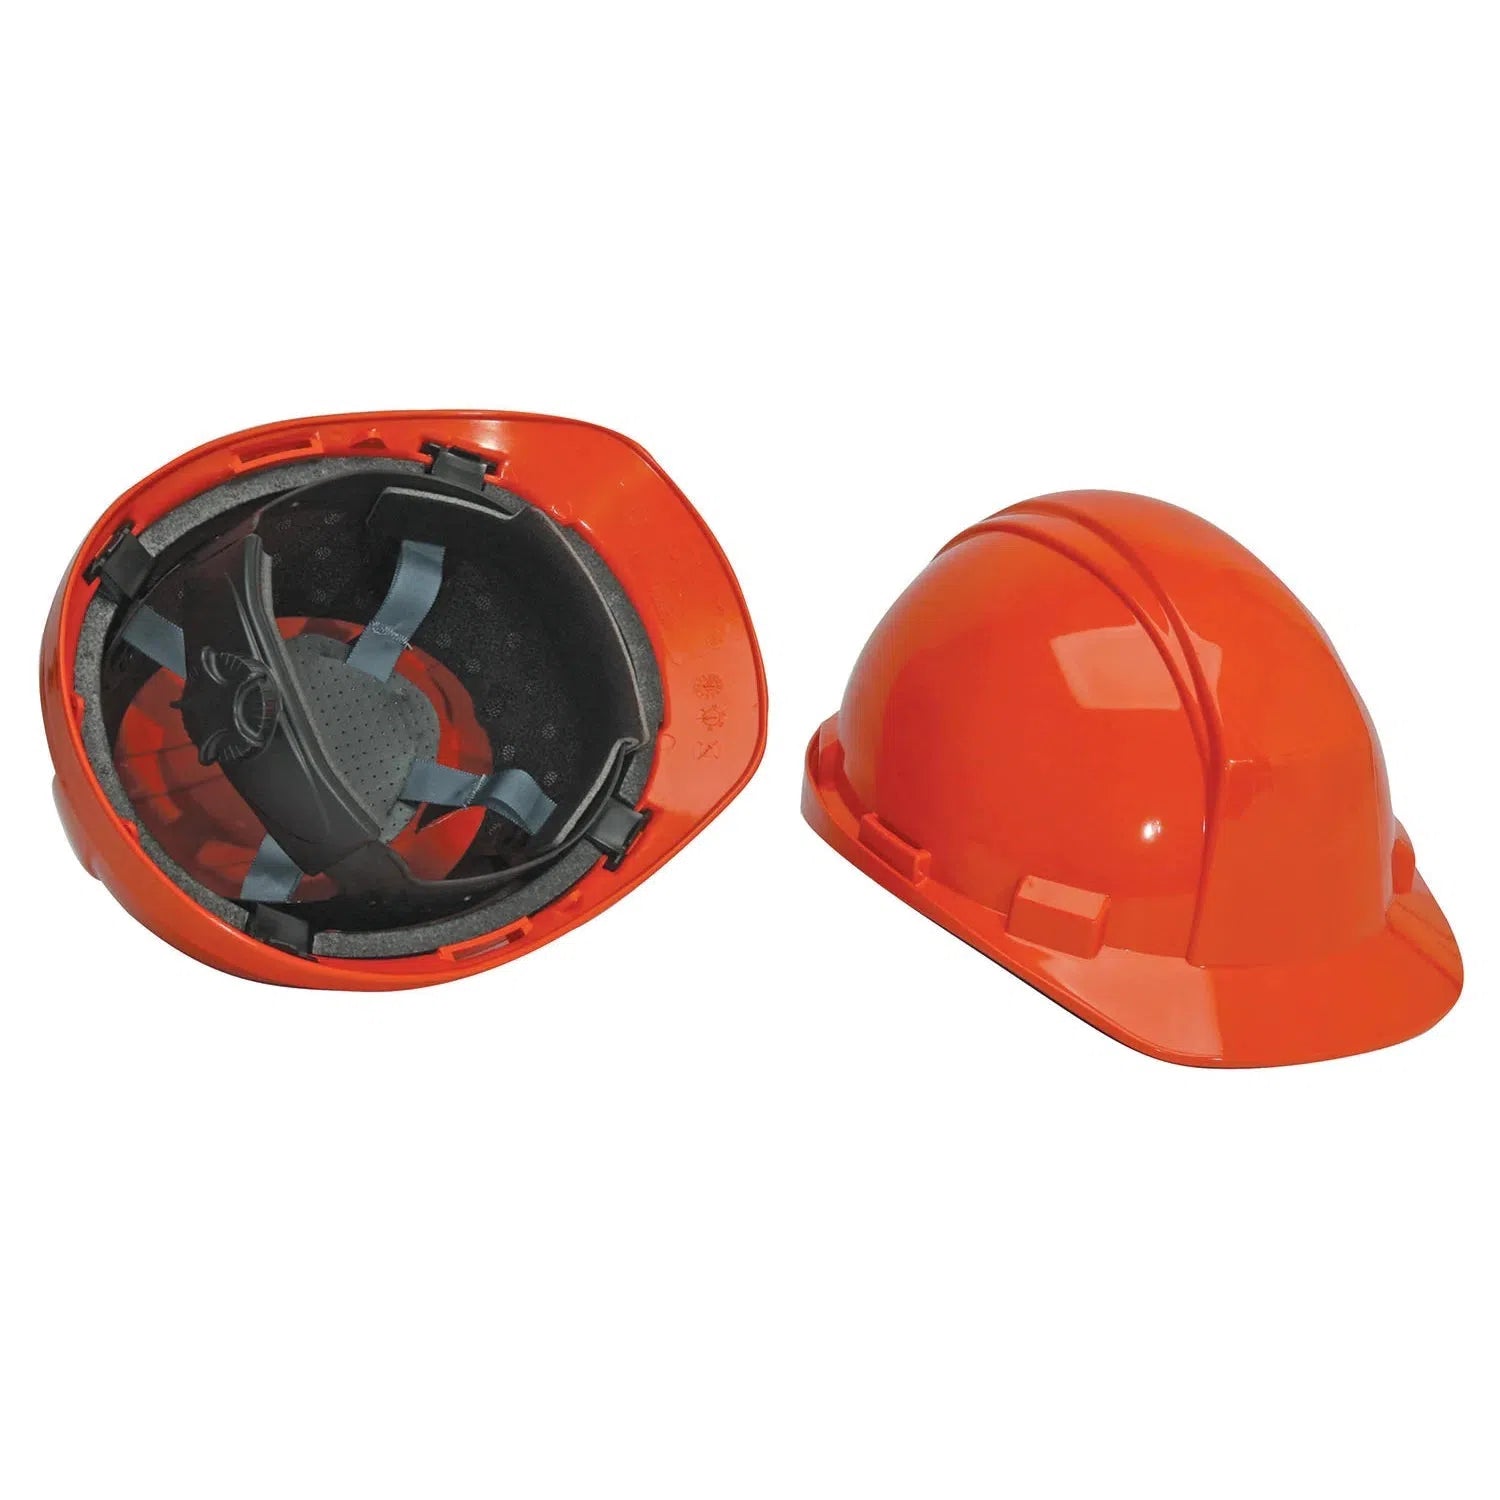 Safety helmet - TYPE 2